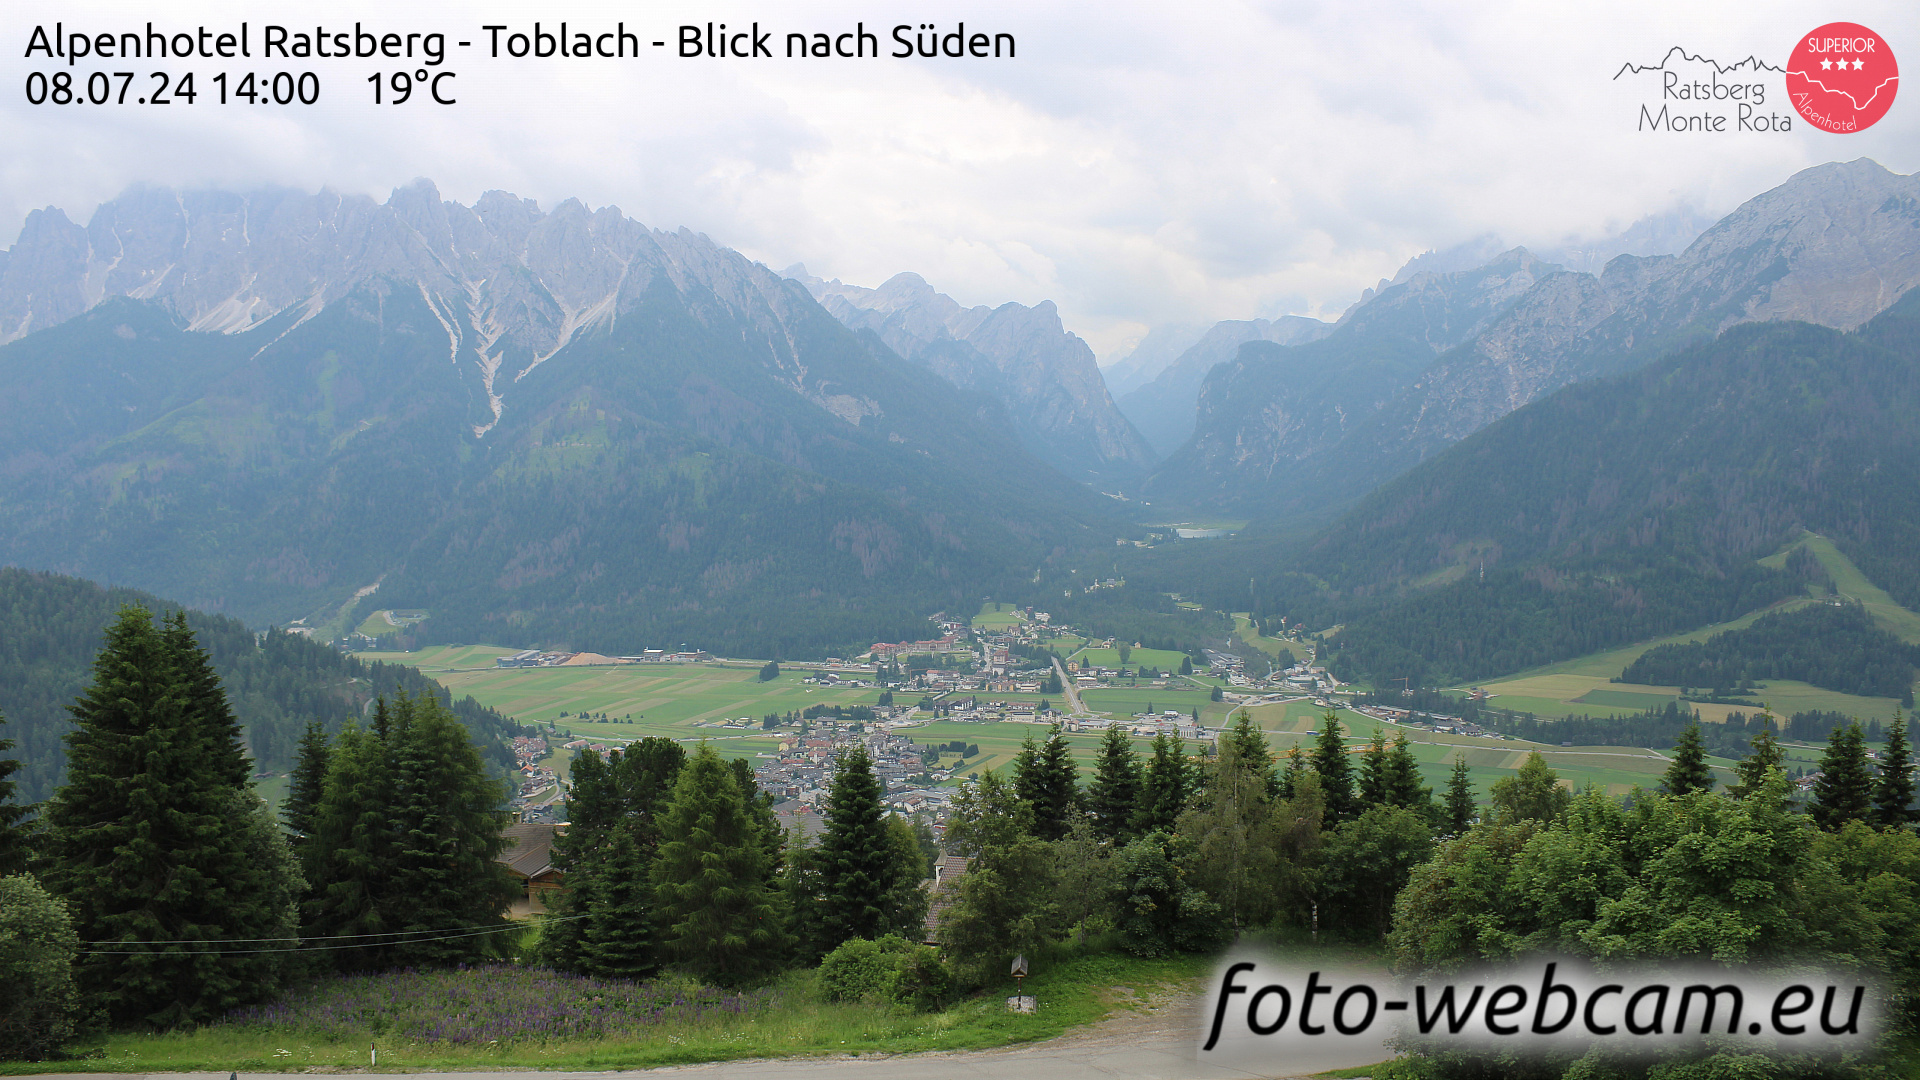 Toblach (Dolomites) Thu. 14:03